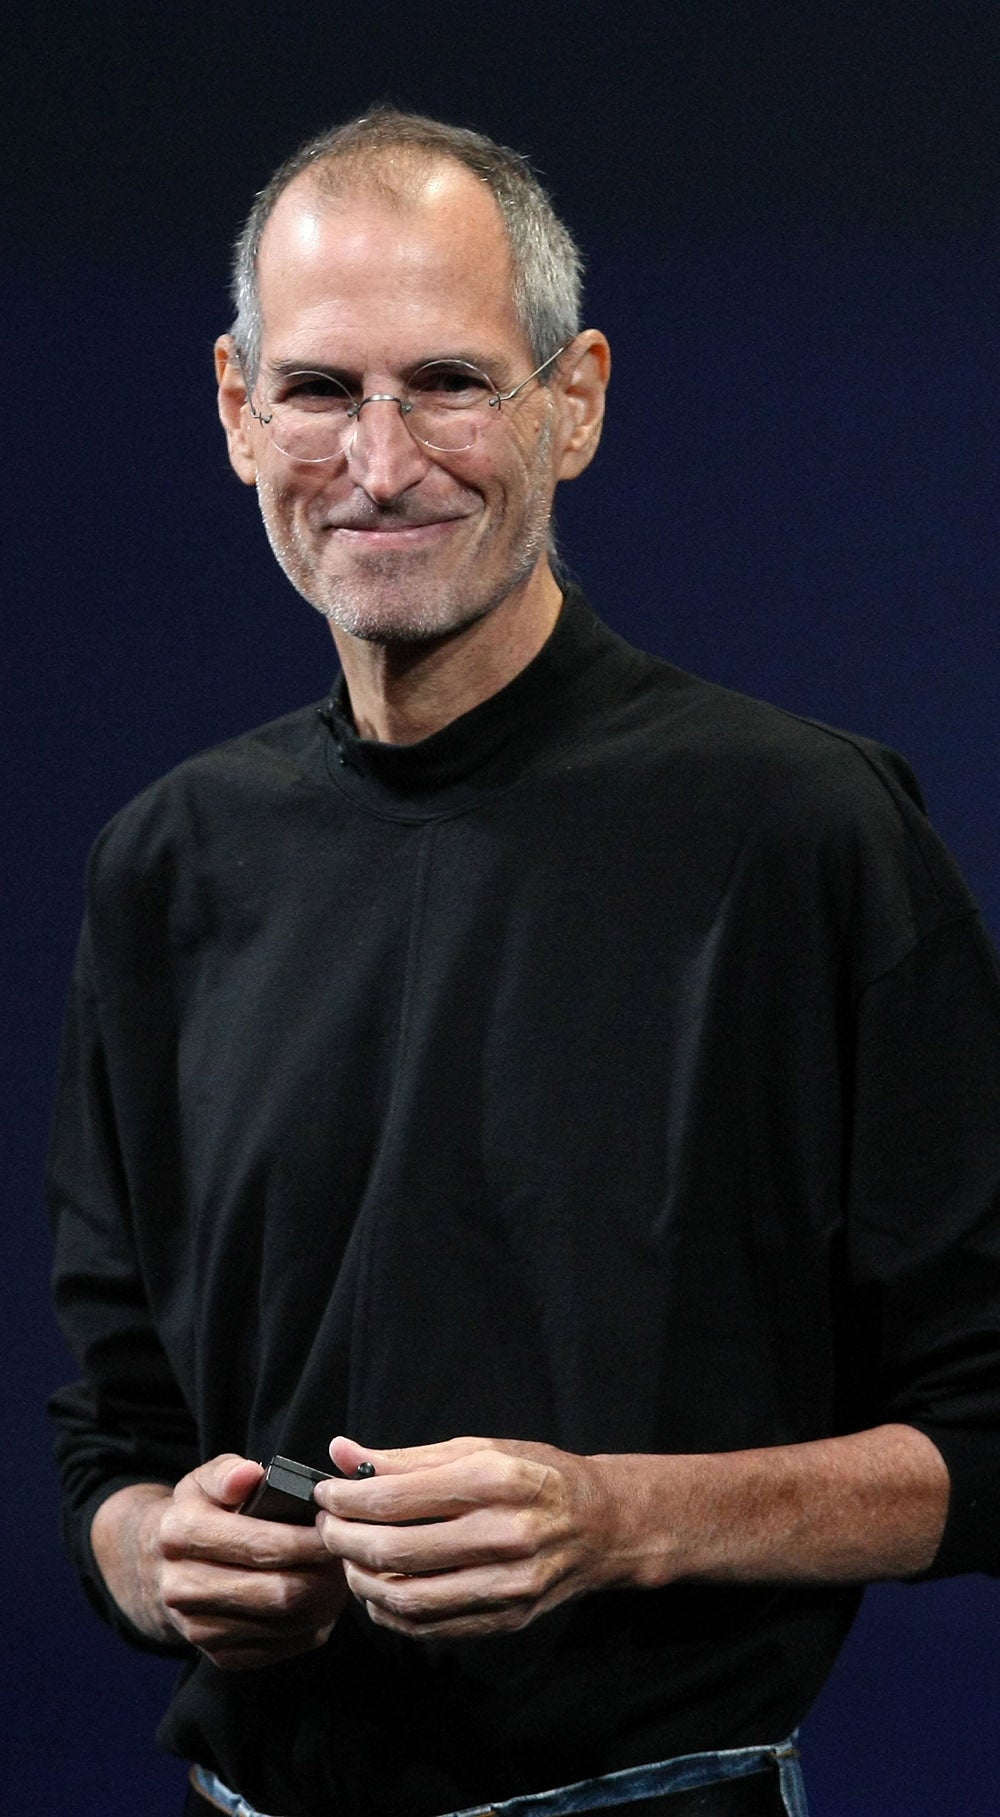 Miyake designed Steve Jobs’ black turtleneck